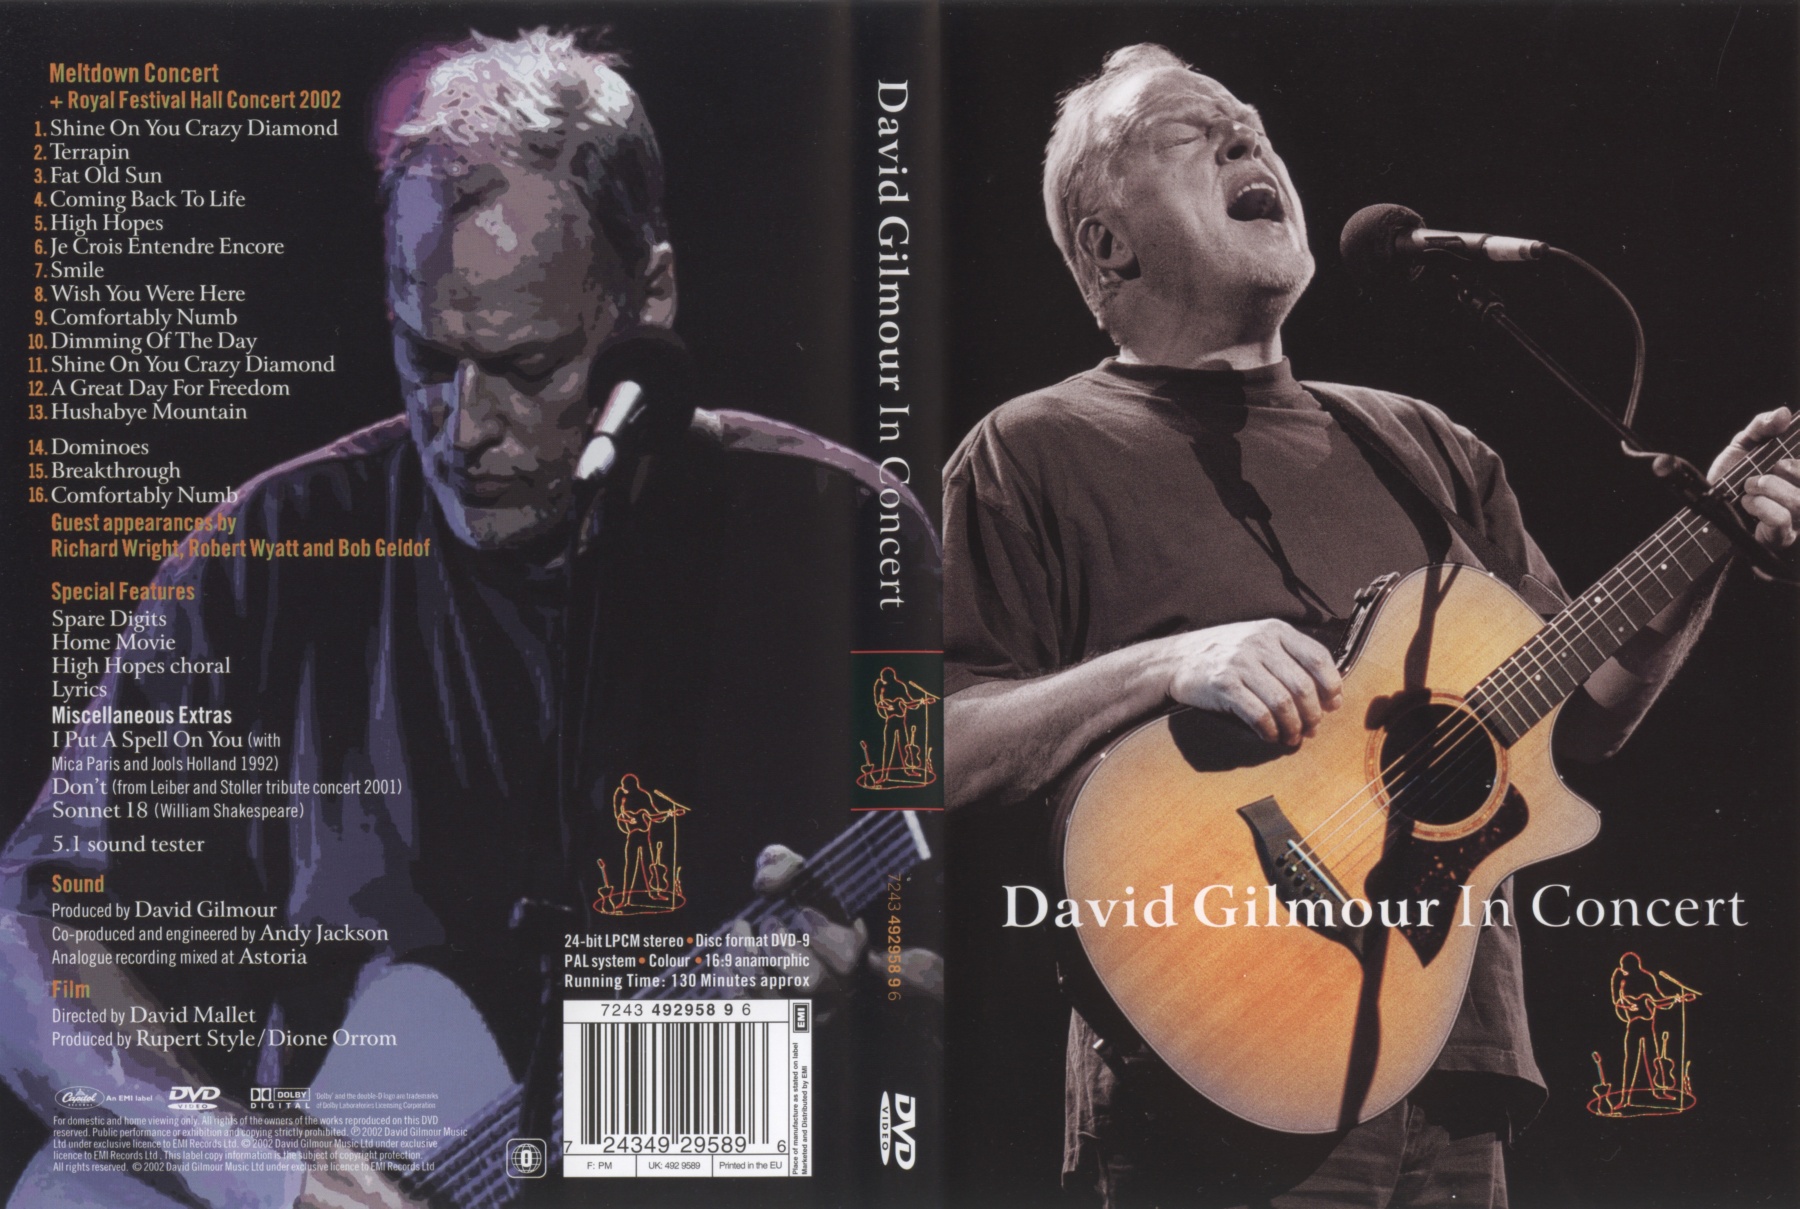 Jaquette DVD David Gilmour concert 2002